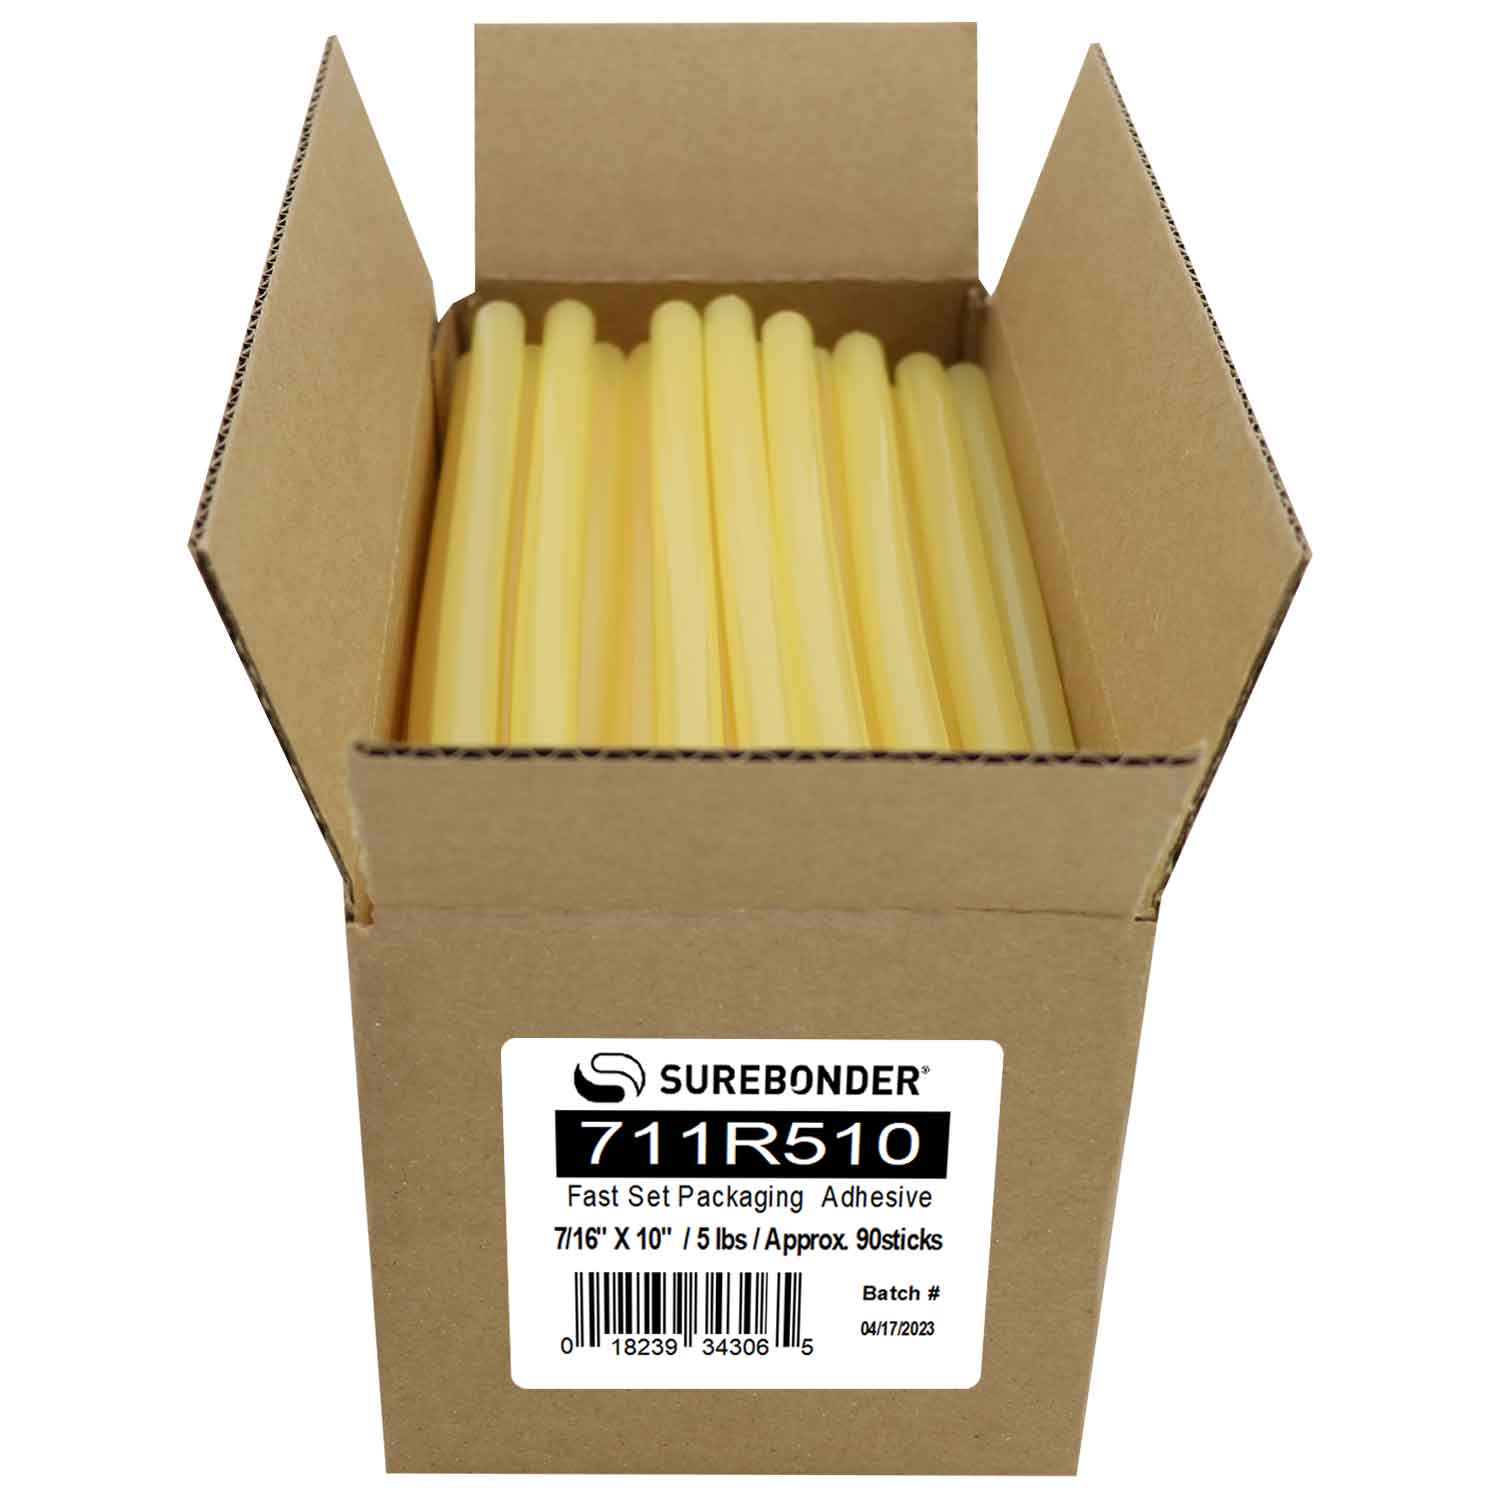 Surebonder 711r510 Packaging Glue Sticks 10 in. - Amber